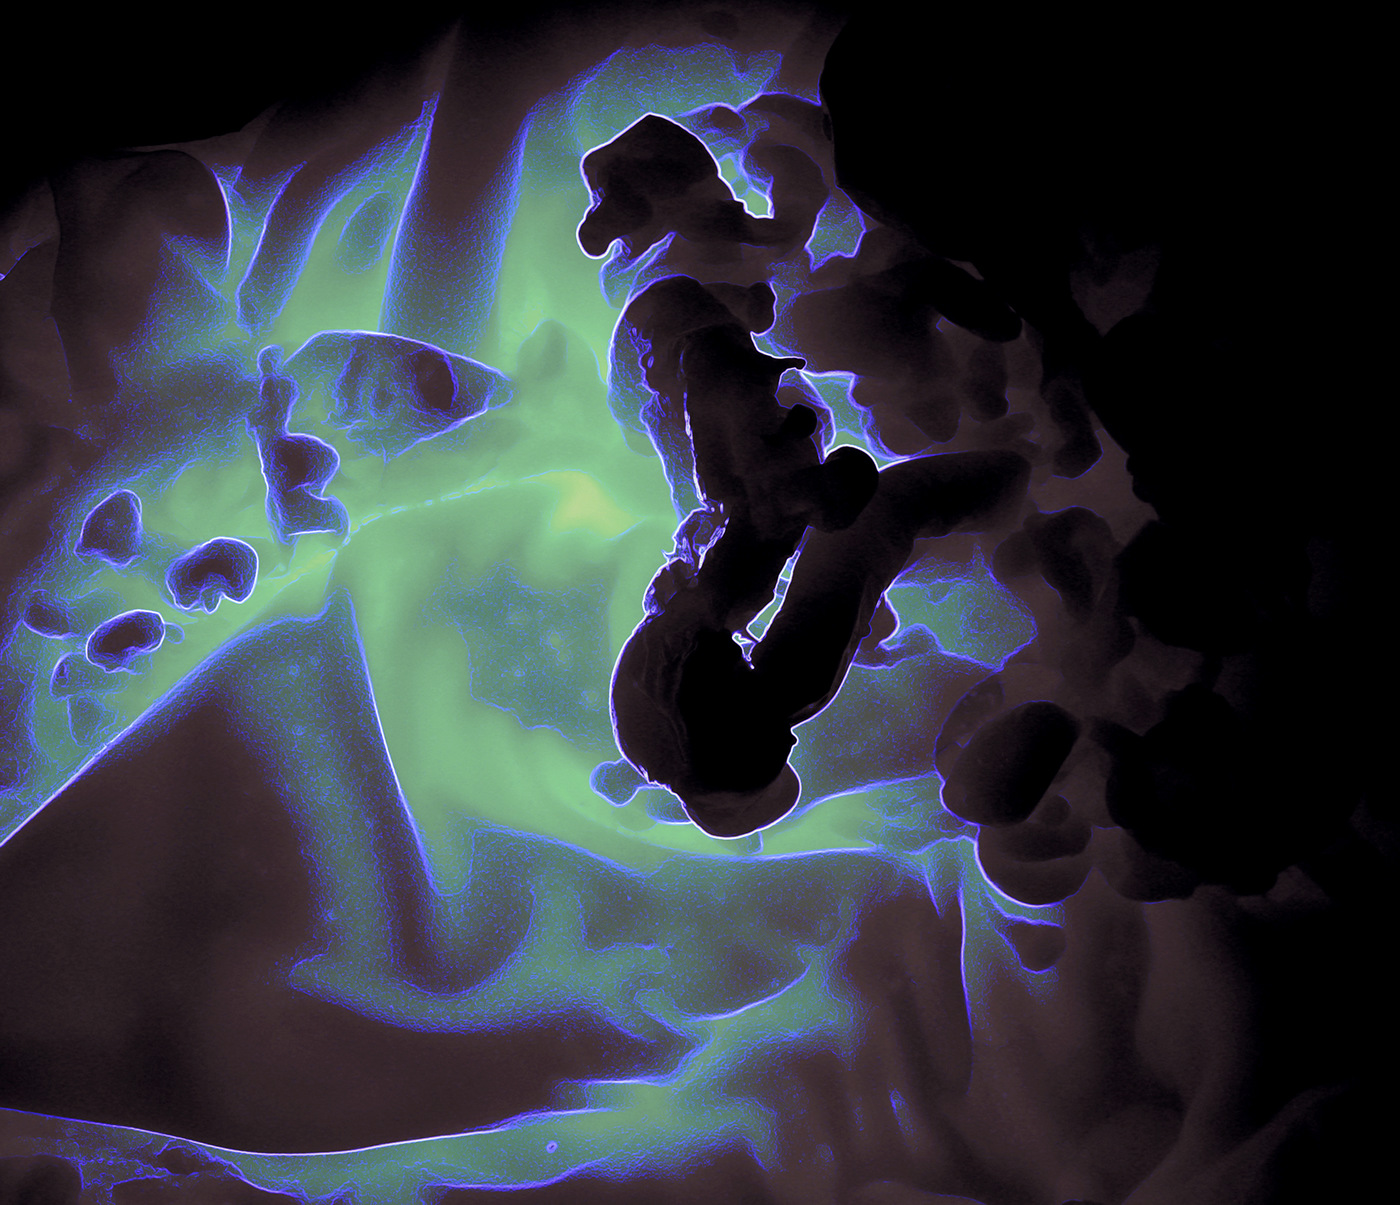 wax molten Liquid neural brain sci-fi sculpture cyber candle future